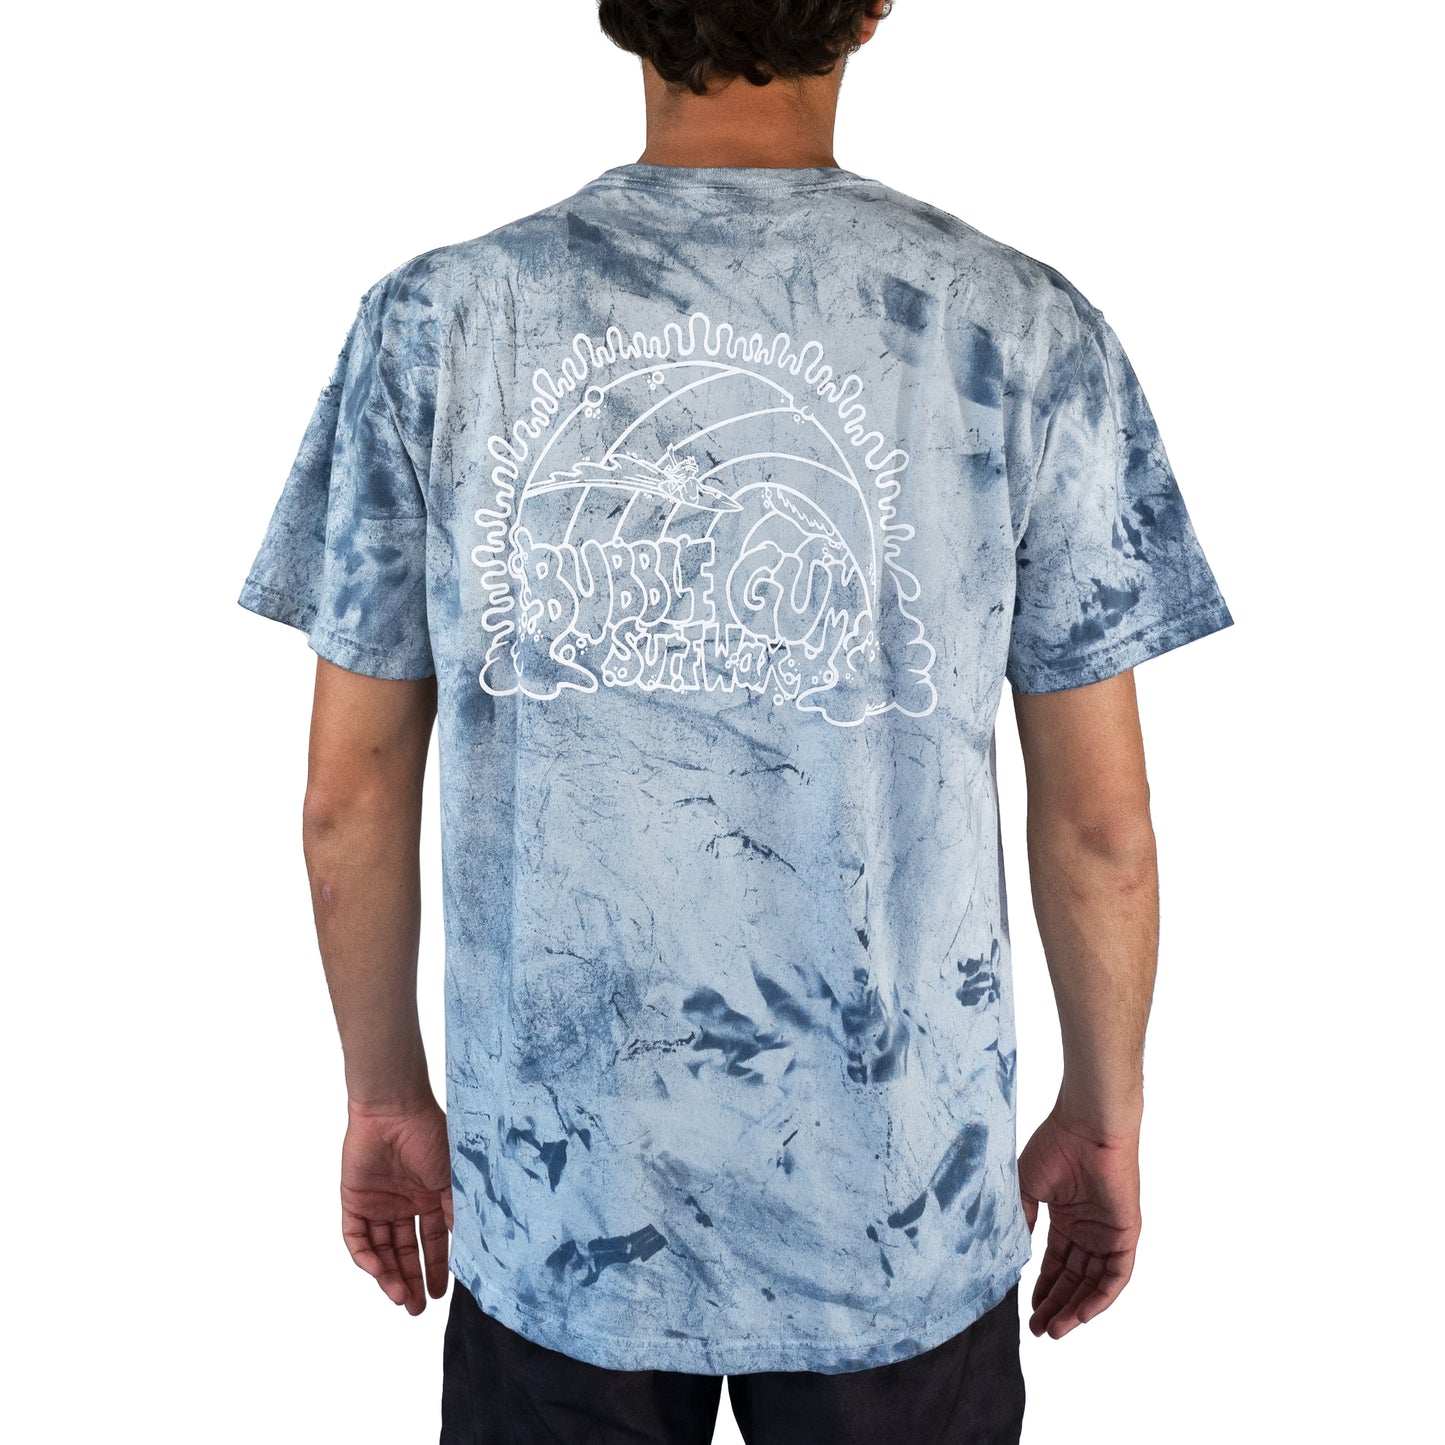 Barrel Stone Wash T-Shirt Blue